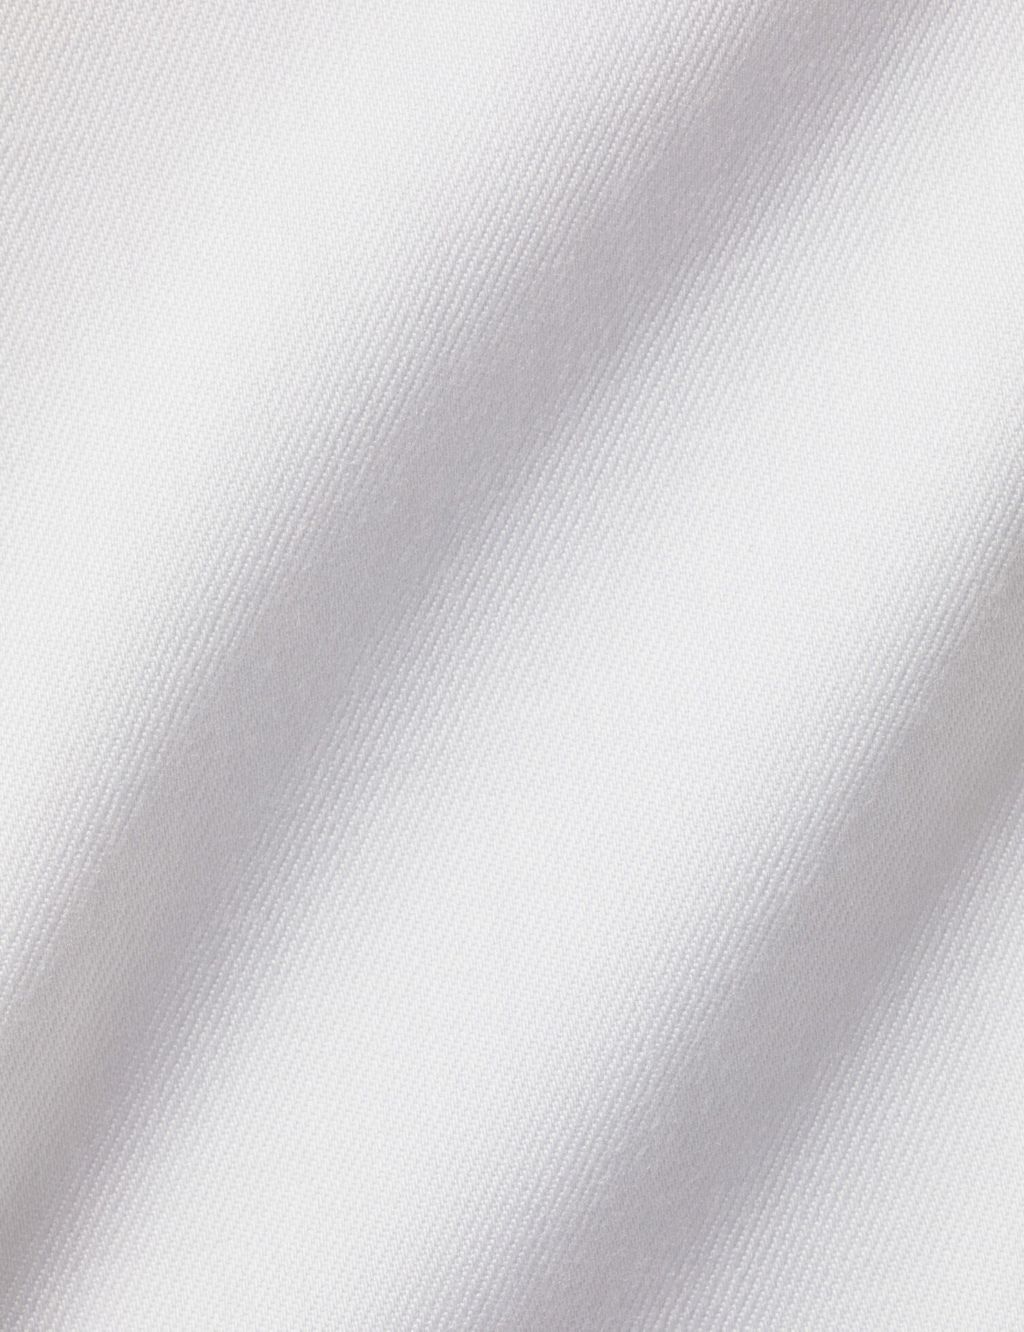 Slim Fit Pure Cotton Twill Shirt image 5